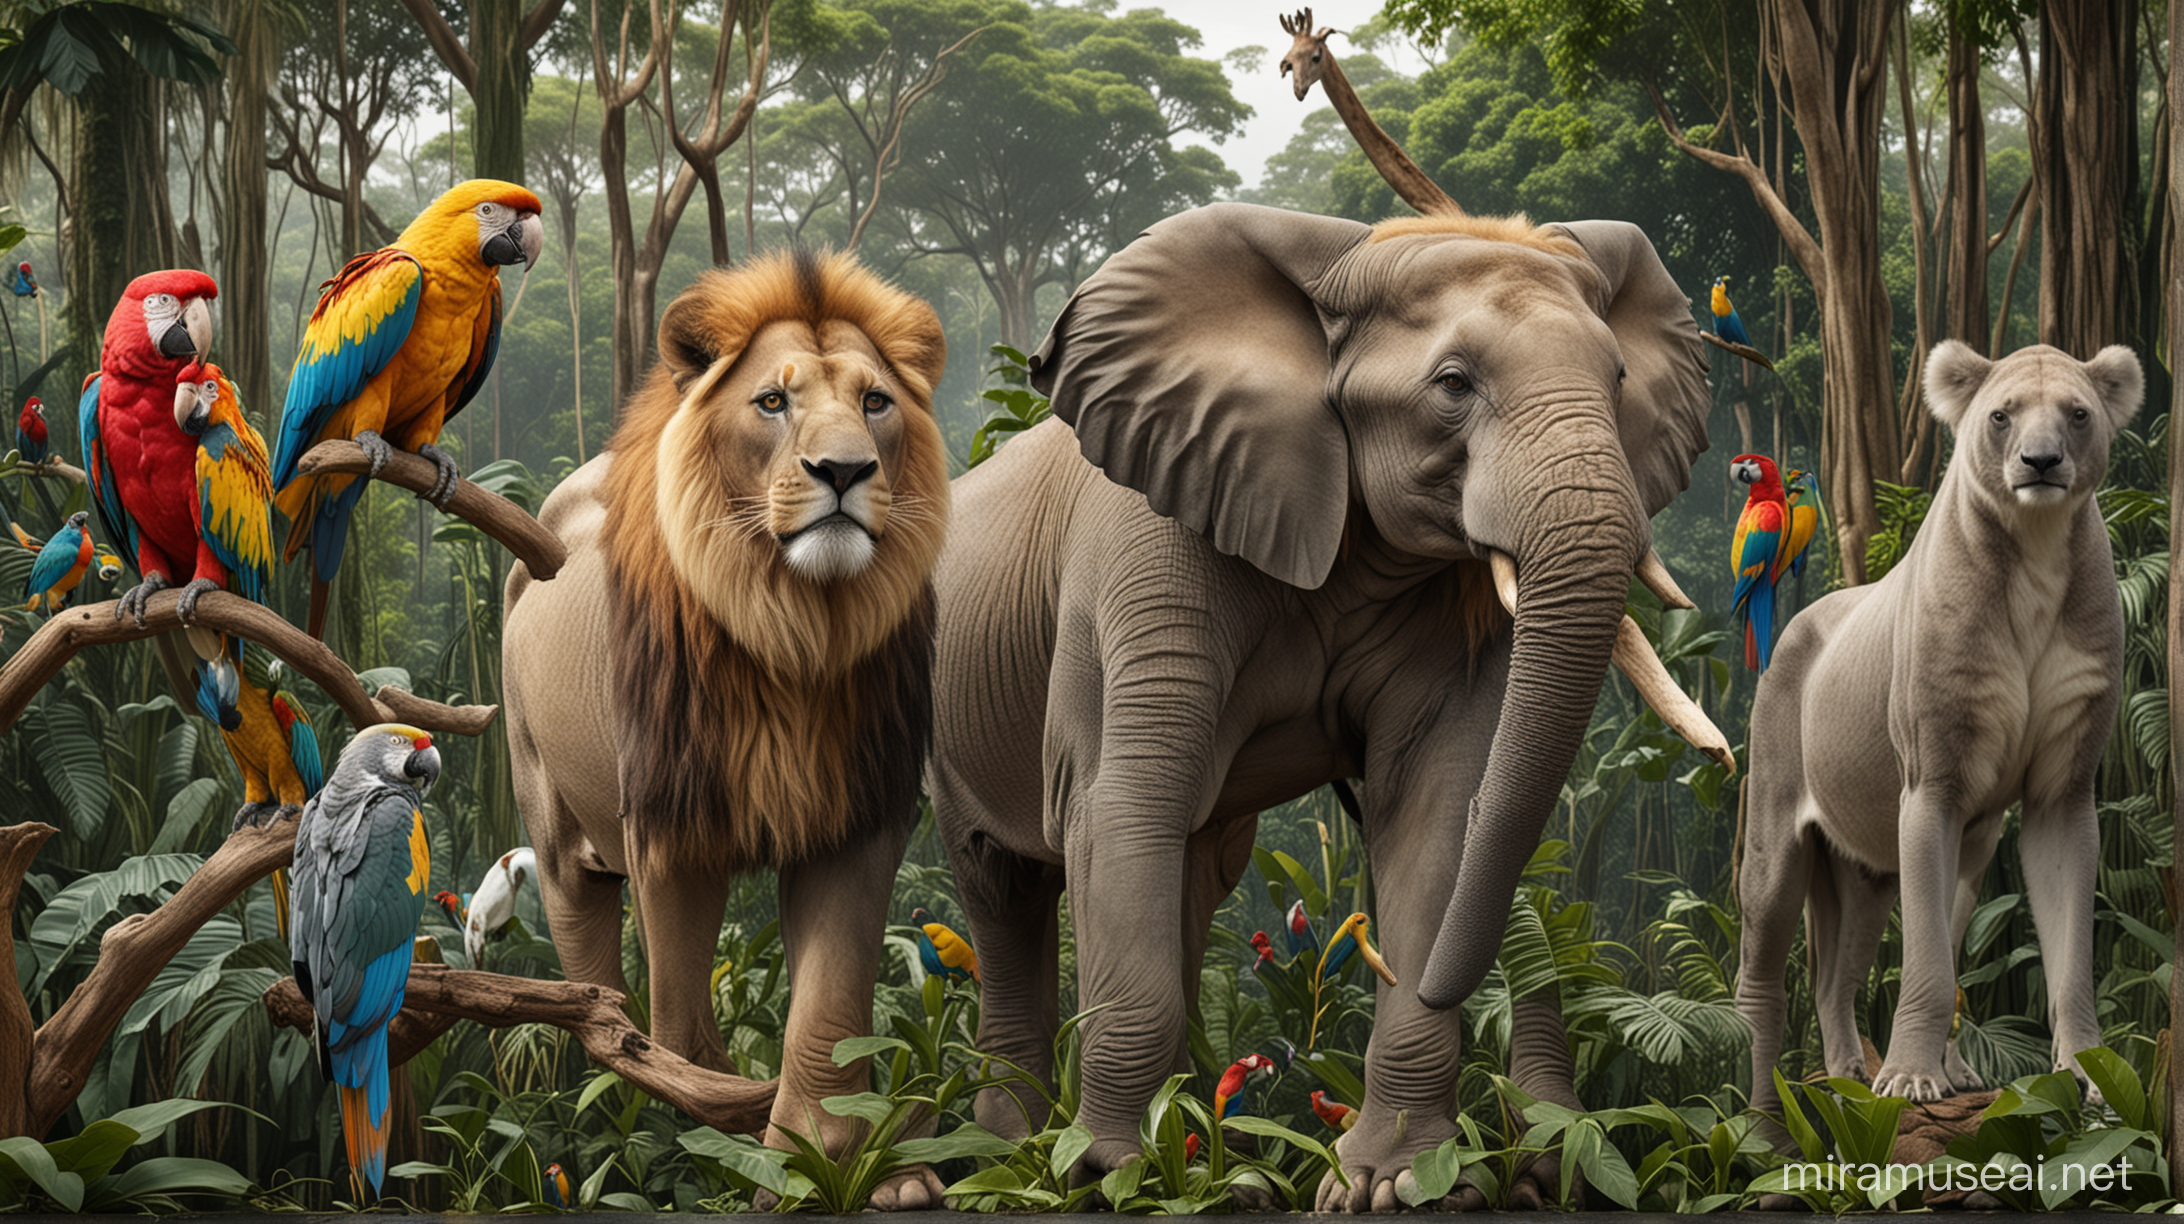 hyper-realistic: elephant, lion, macaws, giraffe, lion and koala photo in amazon jungle